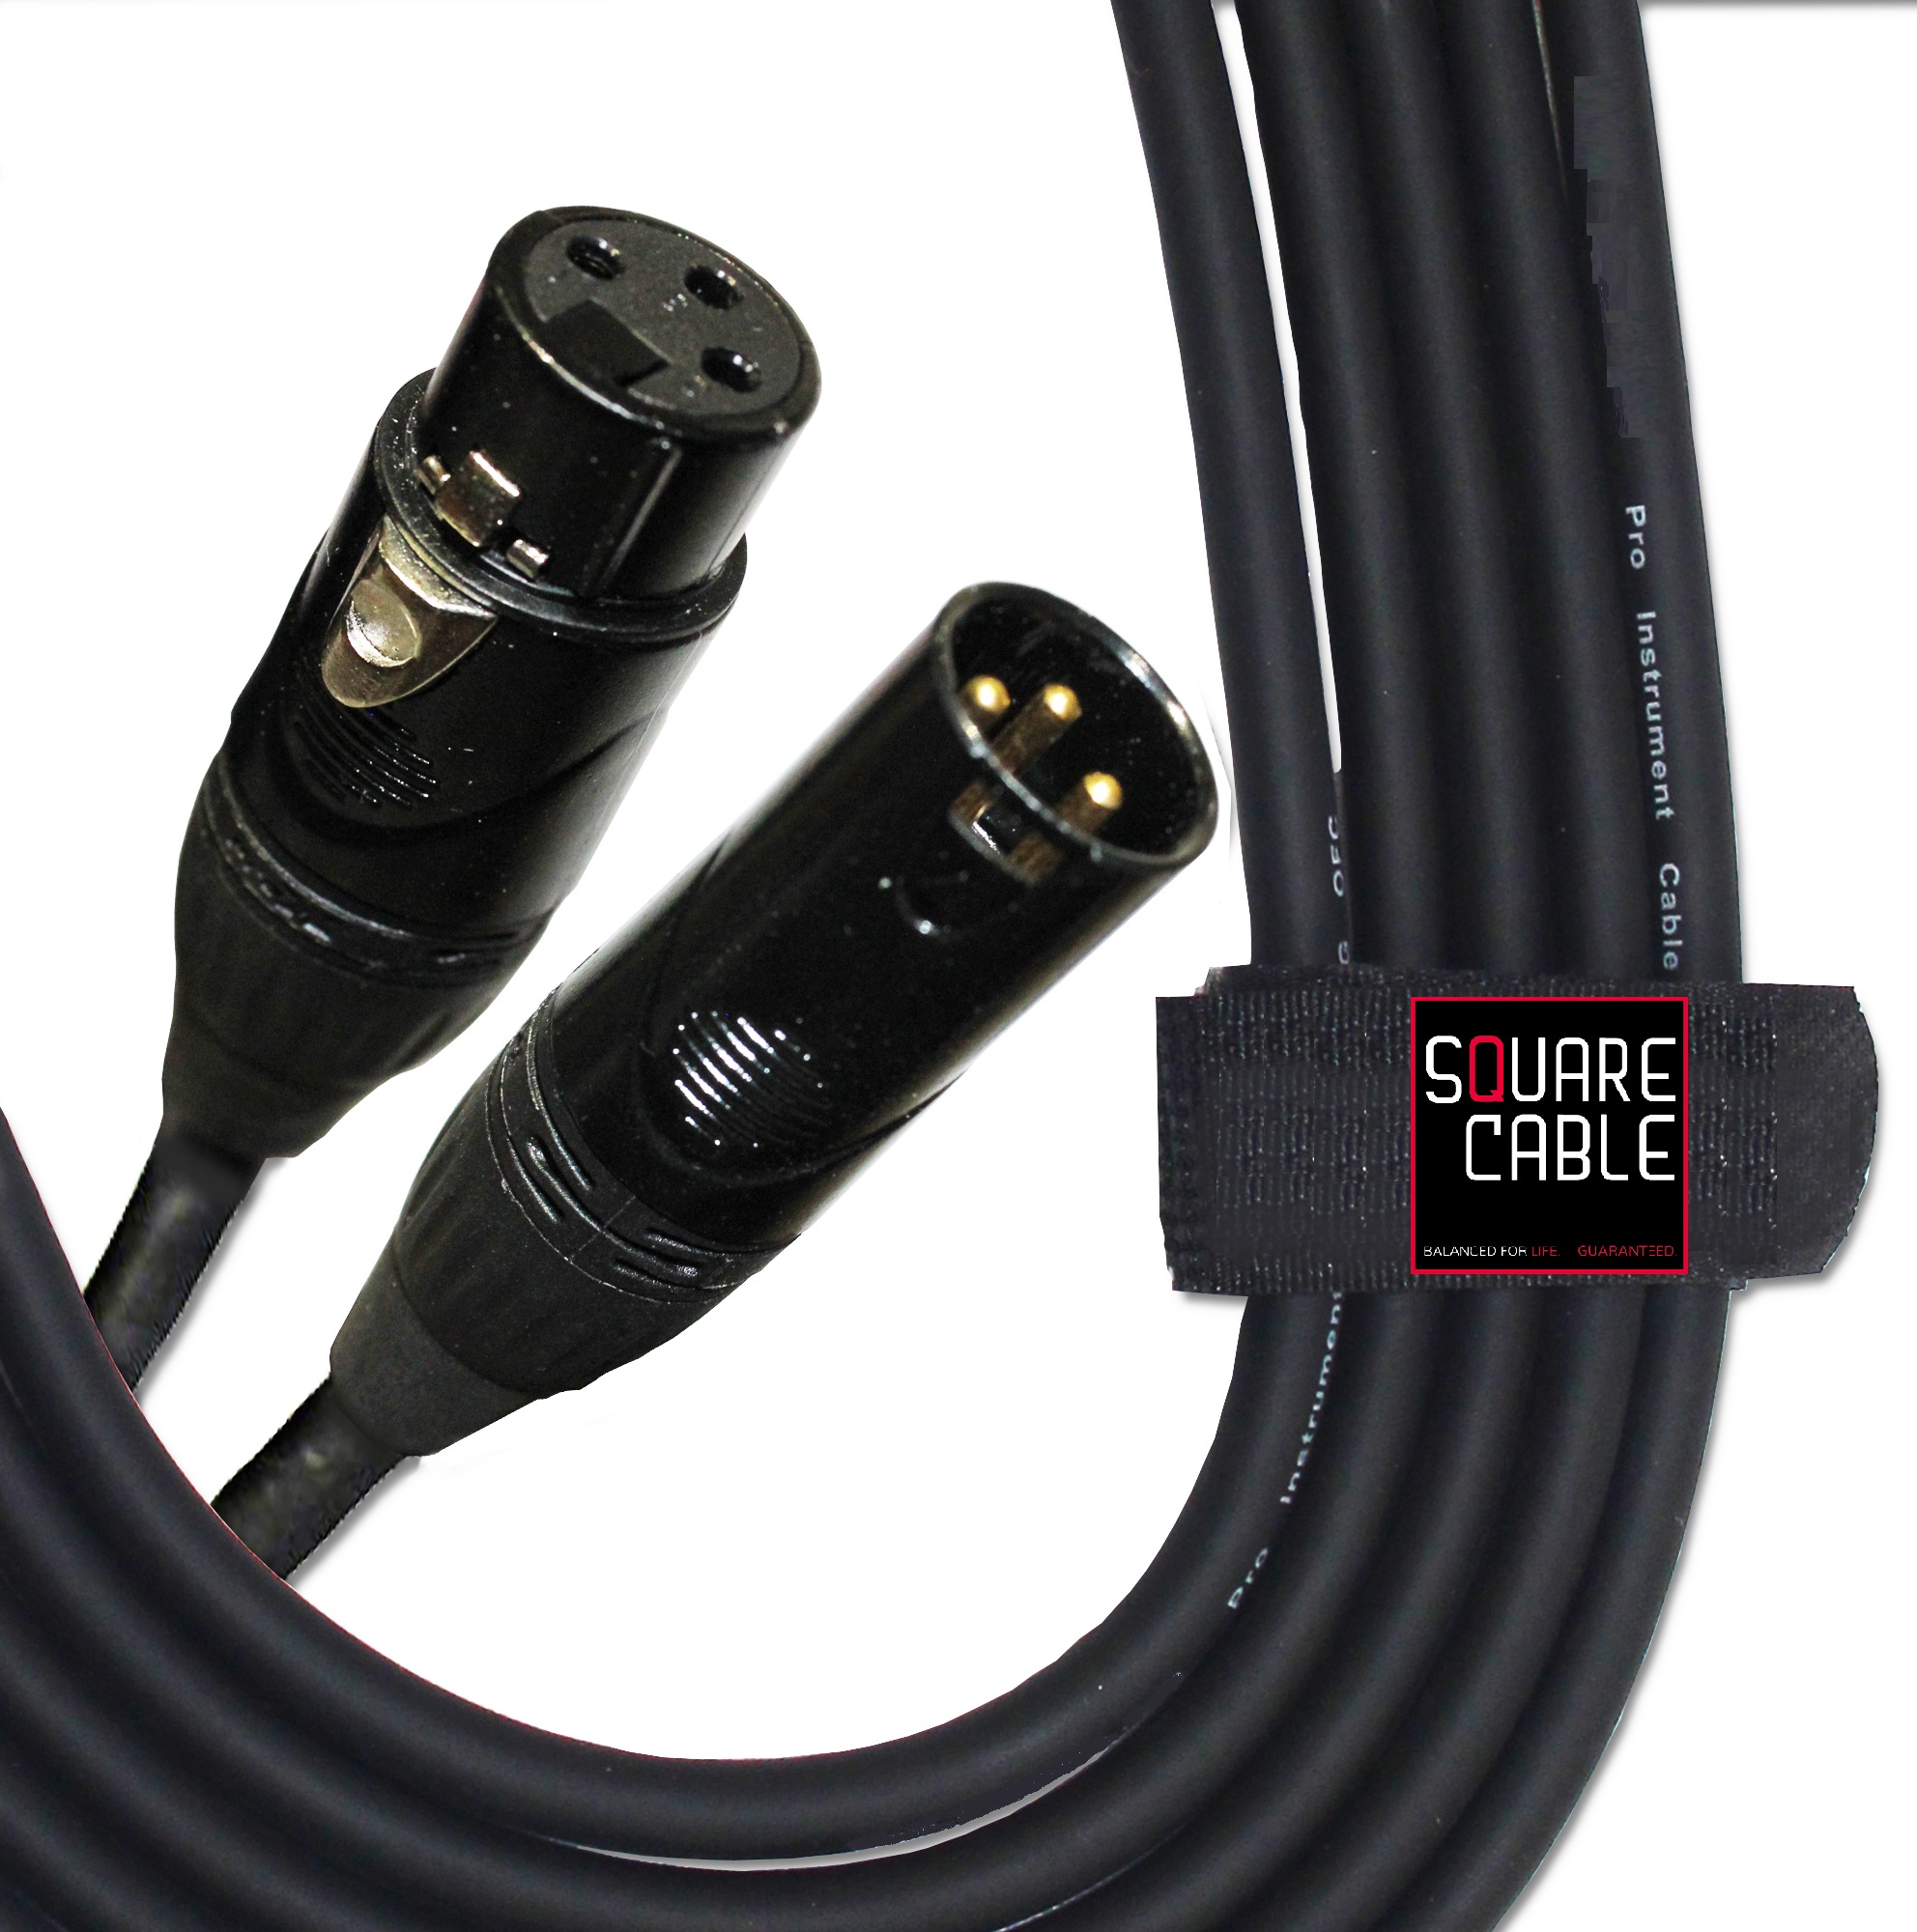 square-cable-xlr-05--5ft-xlr-to-xlr-cable.jpg